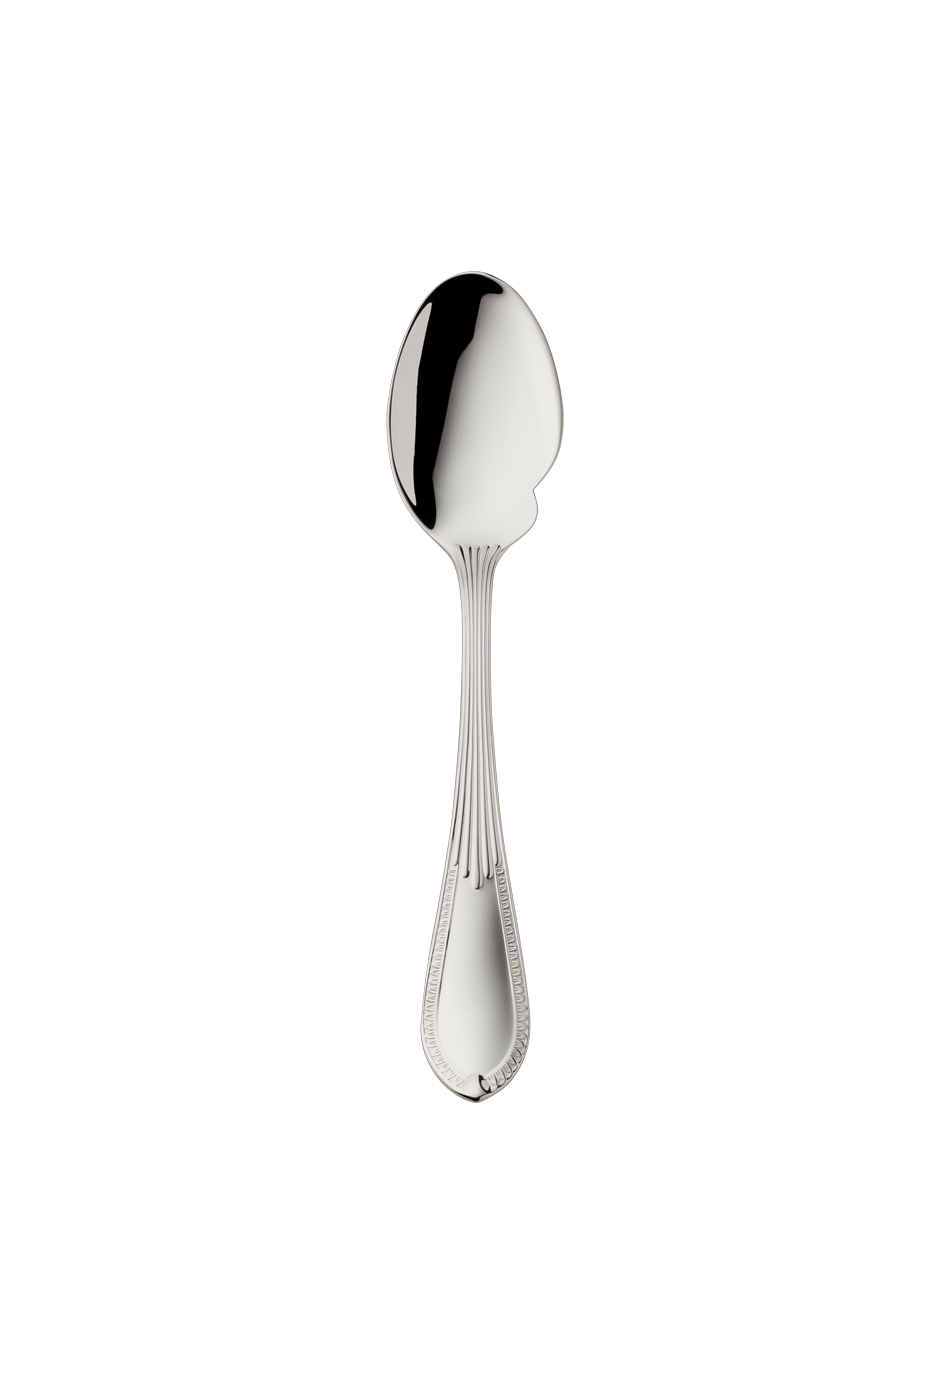 Belvedere Gourmet spoon (150g massive silverplated)